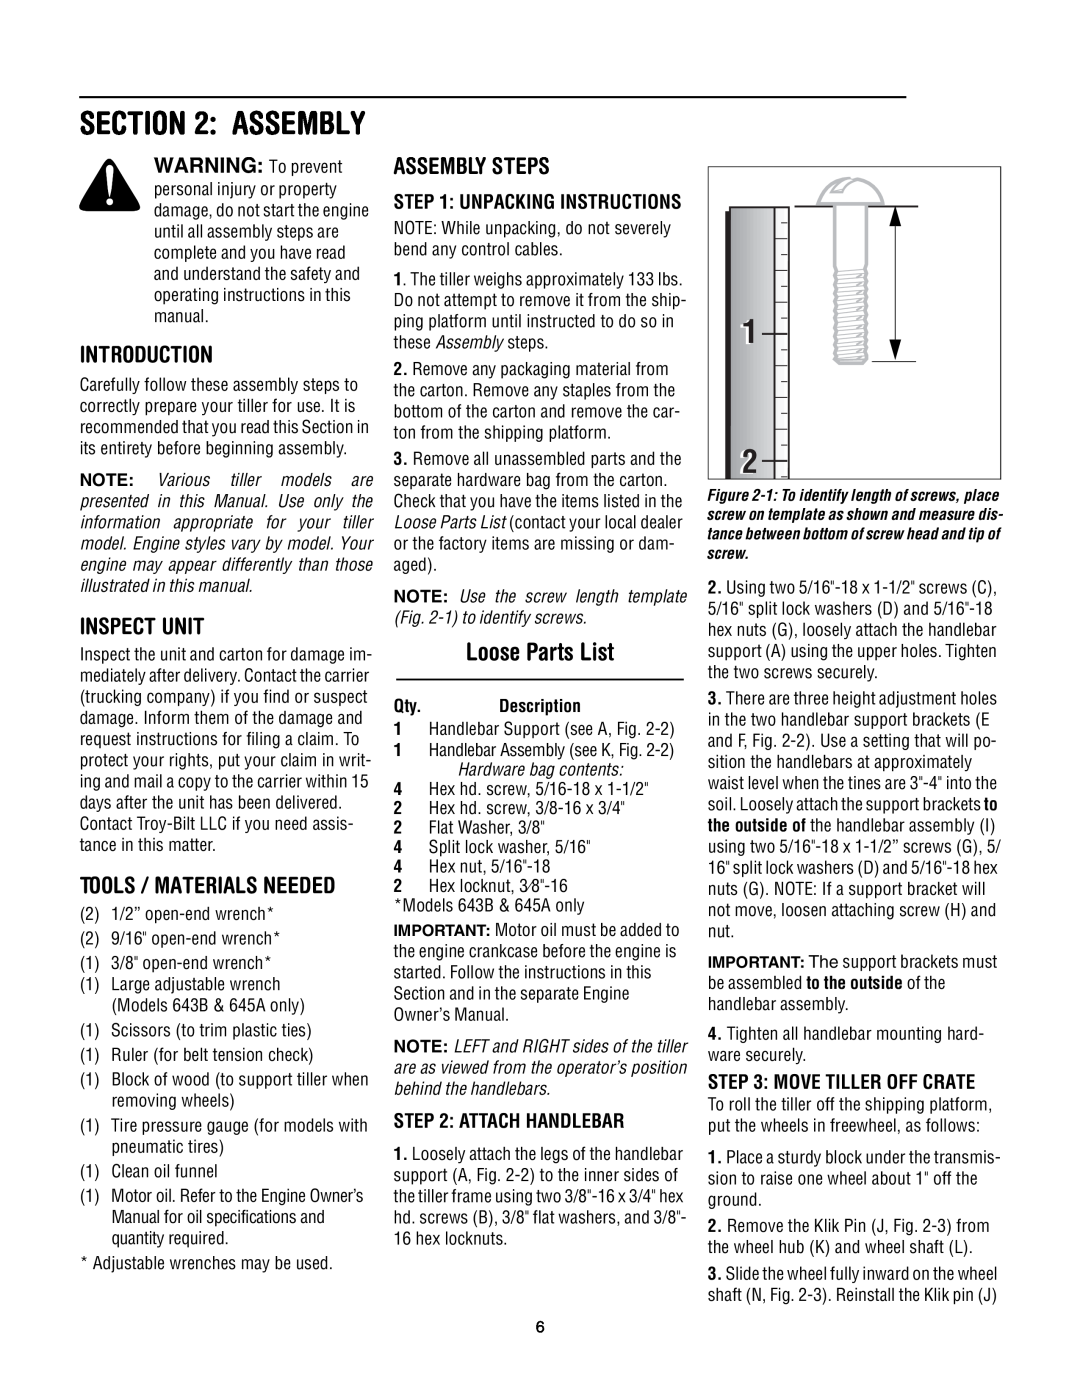 Troy-Bilt 643B Loose Parts List, Introduction, Inspect Unit, Assembly Steps, Tools / Materials Needed, Description 